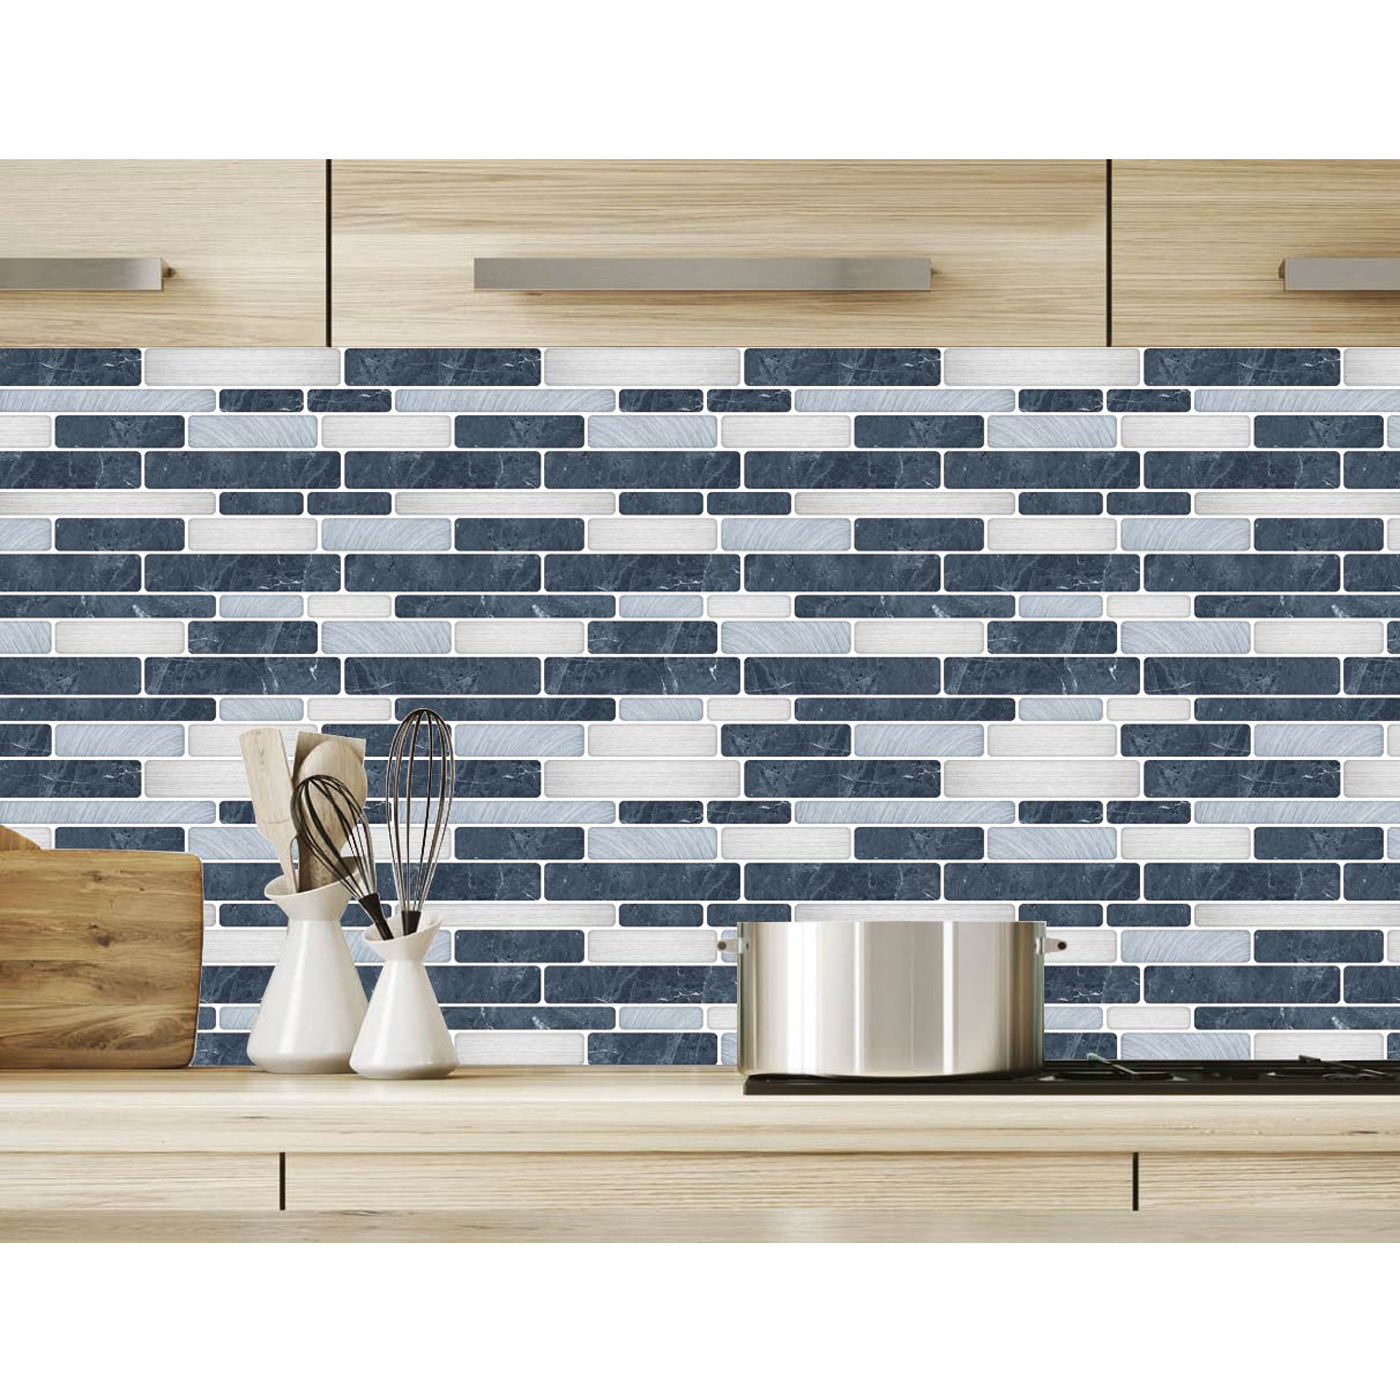 Self-Adhesive Kitchen Backsplash, Marble Look Decorative Tiles (10 Tiles)